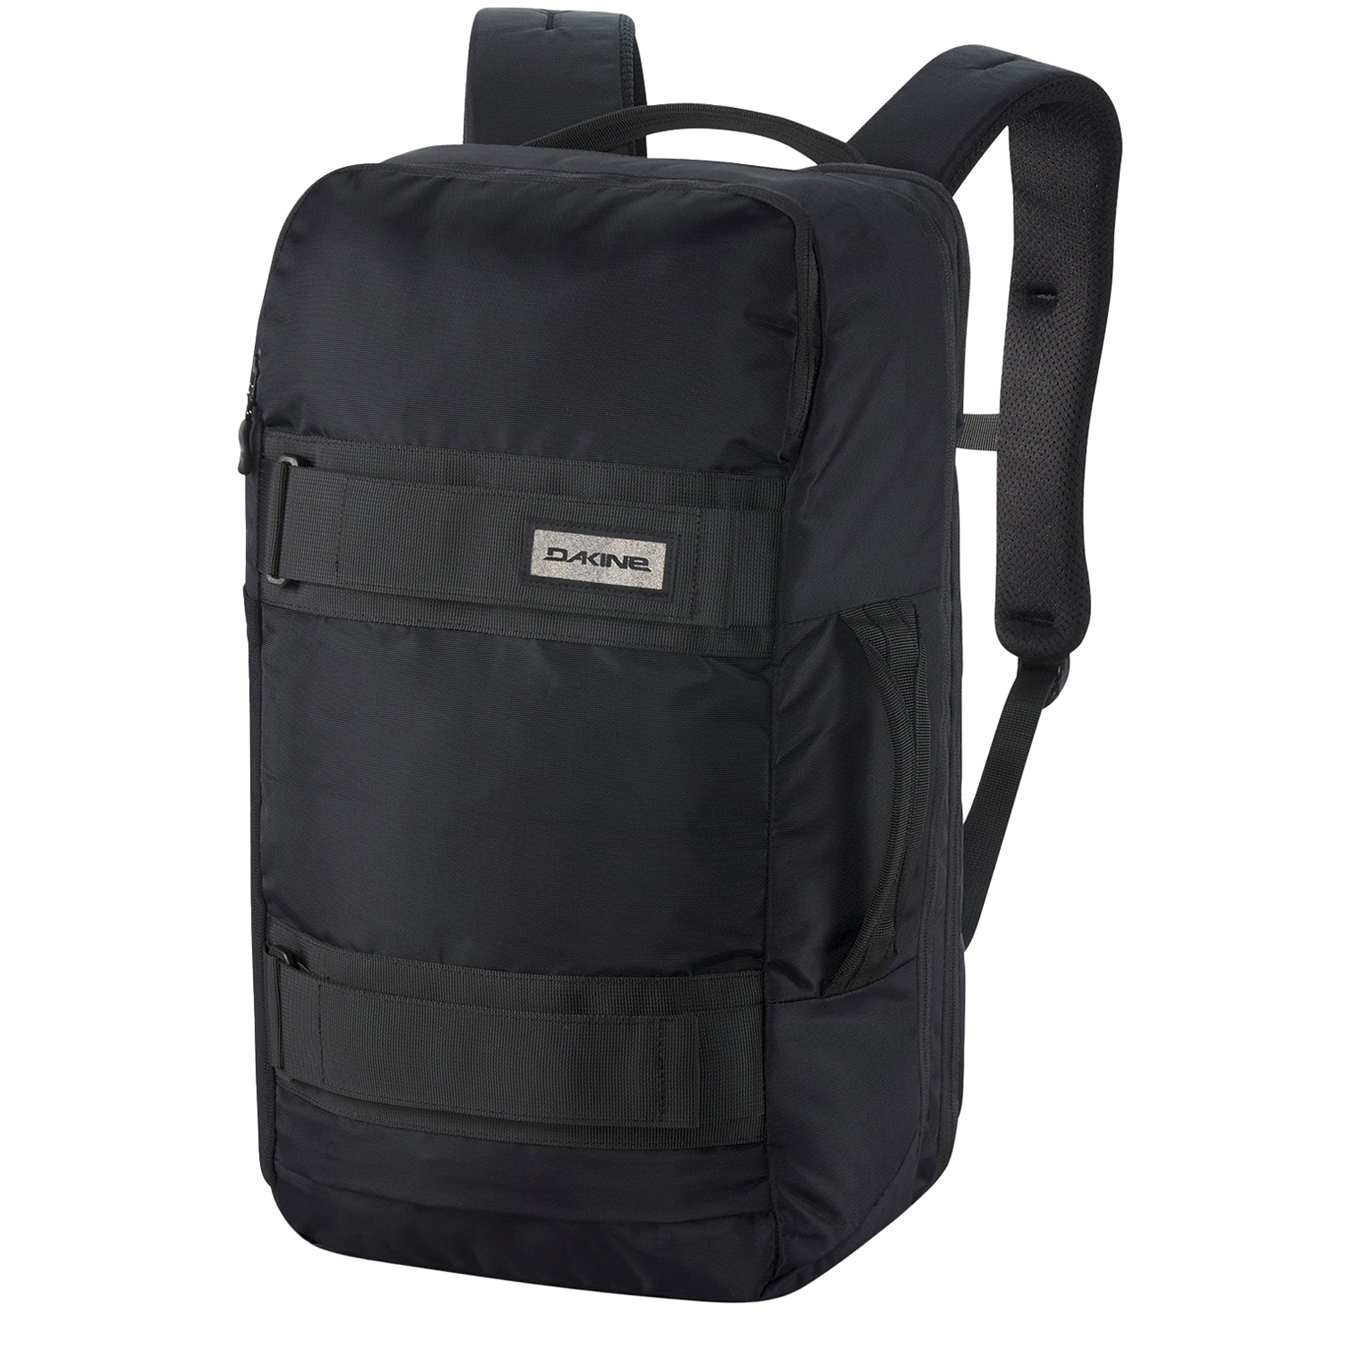 Dakine Mission Street Dlx 32L black nylon backpack